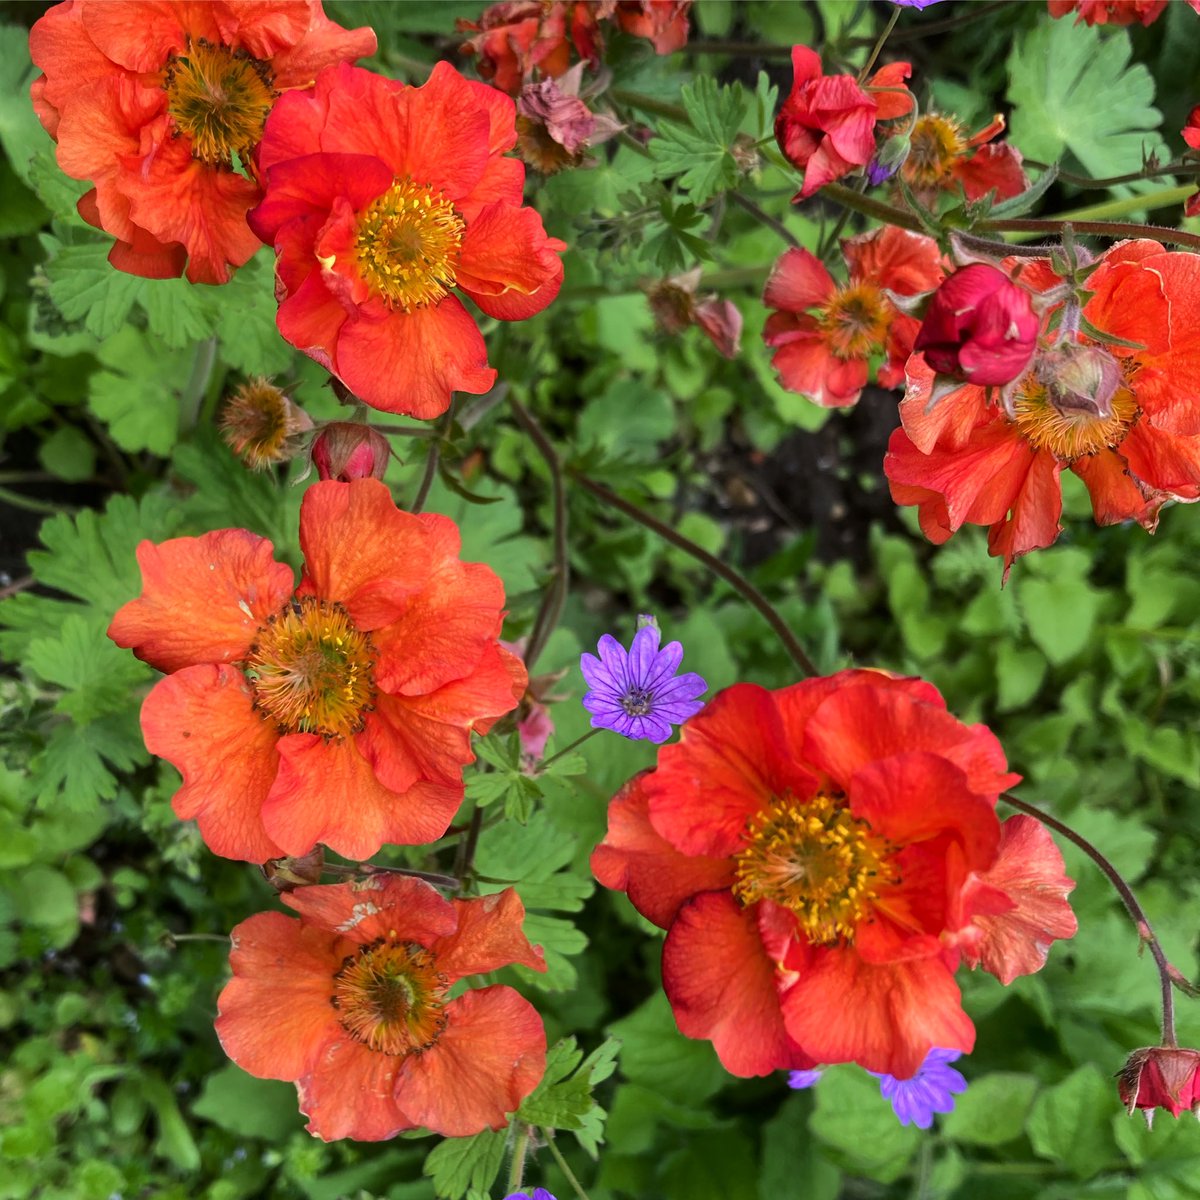 🧡Looking forward to seeing this Geum flower again 🧡

#nannysgardenworld 

#geum #geums #avens #orangeflowers #perennials #flowers #garden #FlowerHunting #beautiful #gardening #photography